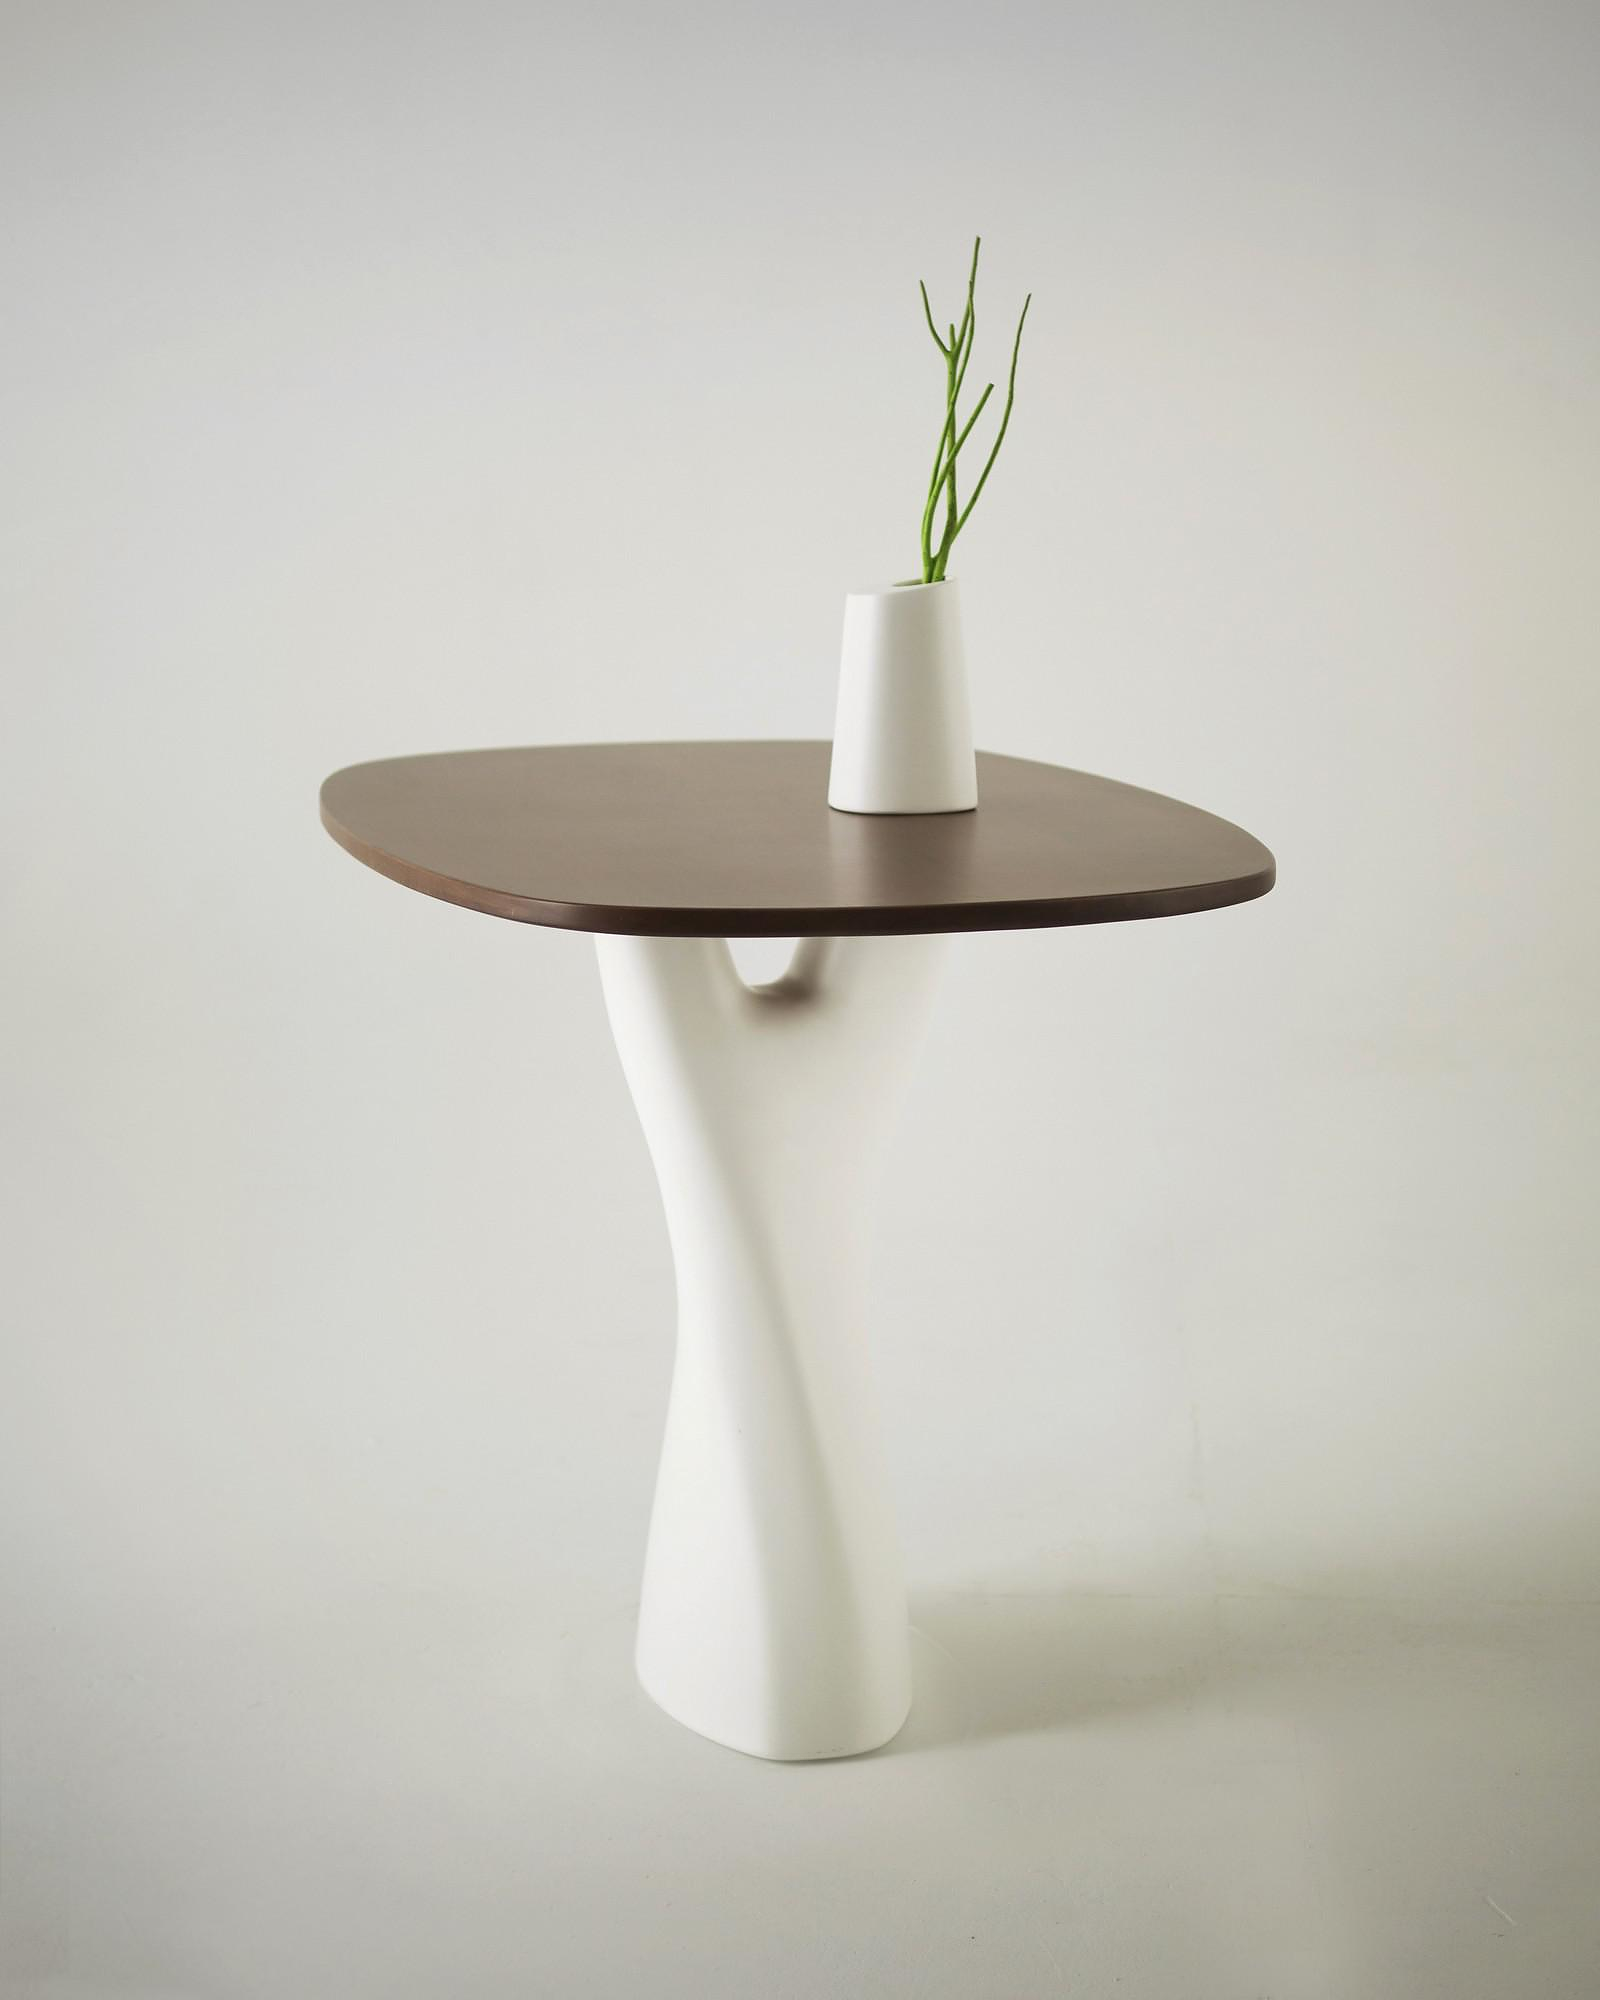 Treeangle a table/vase fusion by Anna Strupinskaya.